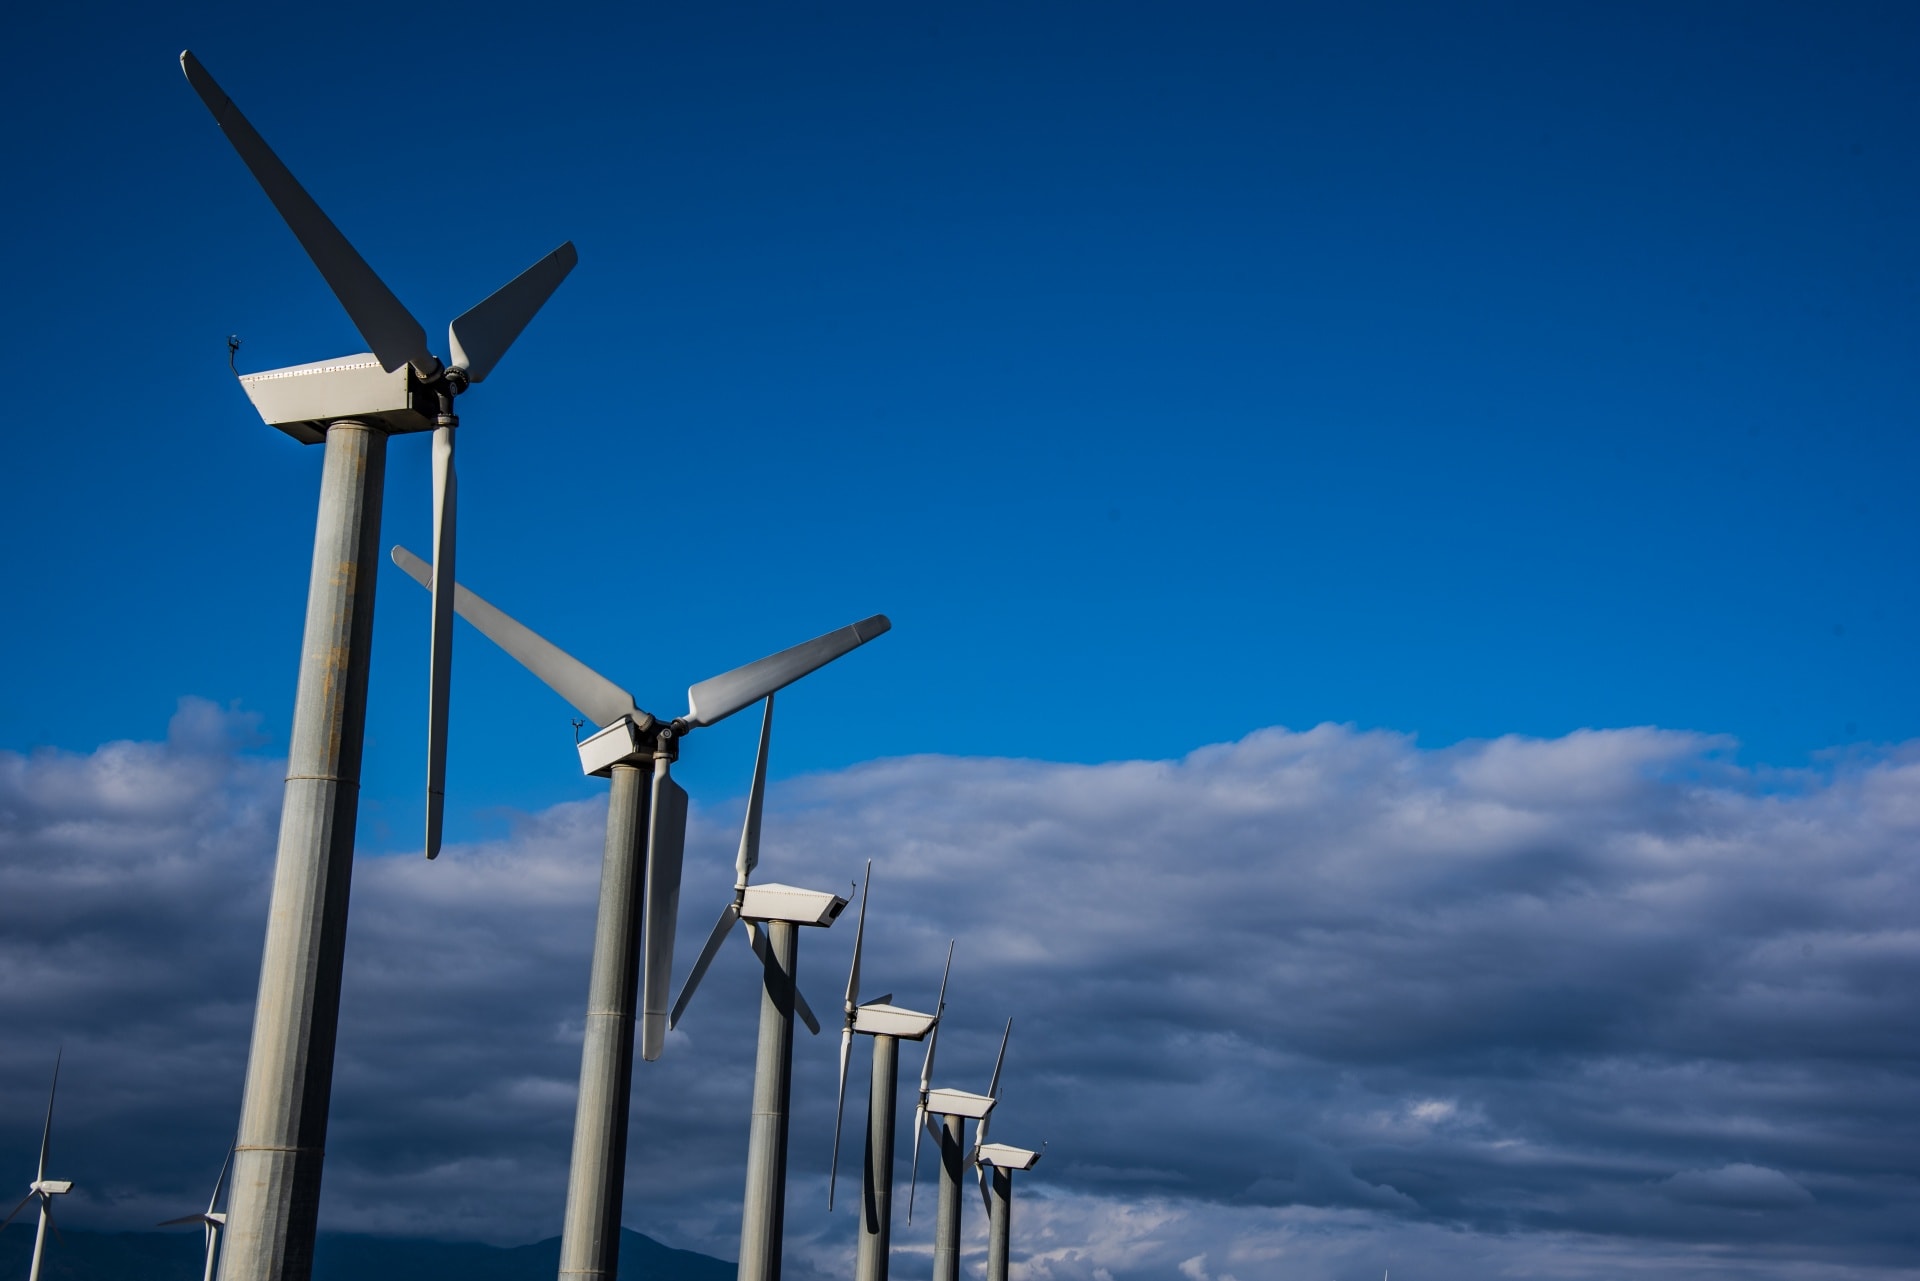 VASTAS, turbine eolice a impatto zero entro il 2040